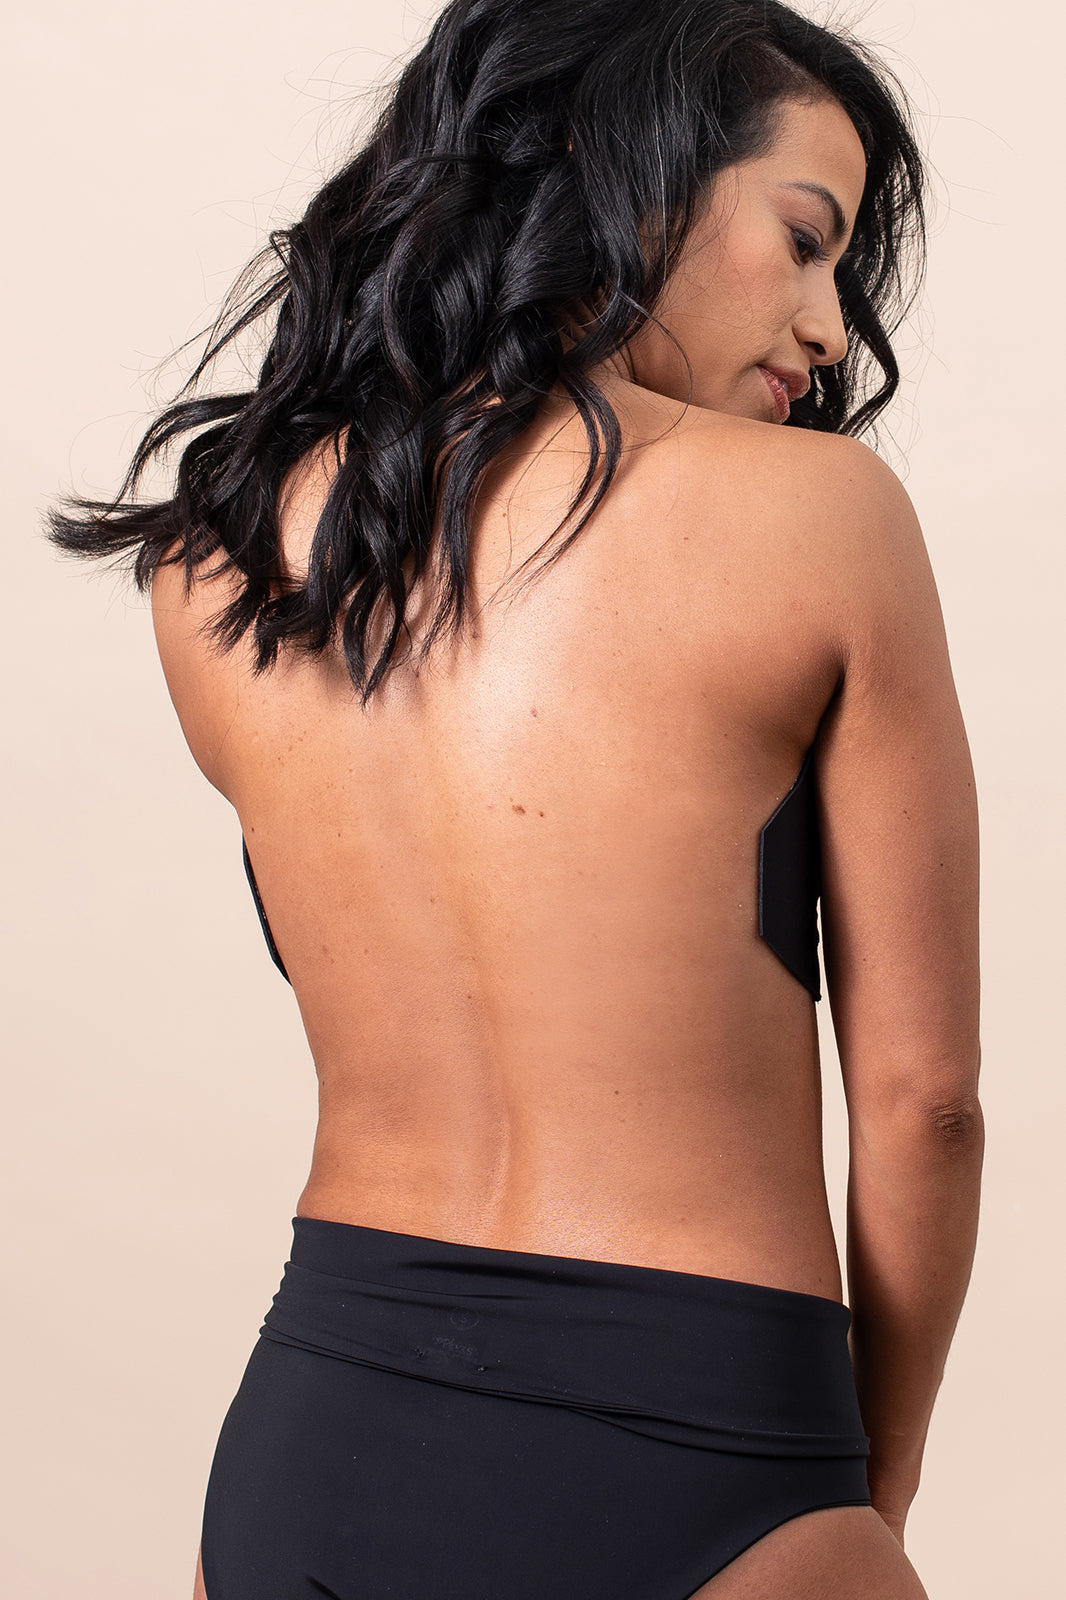 STAYkini: Backless, strapless swimwear that avoids pesky tan lines